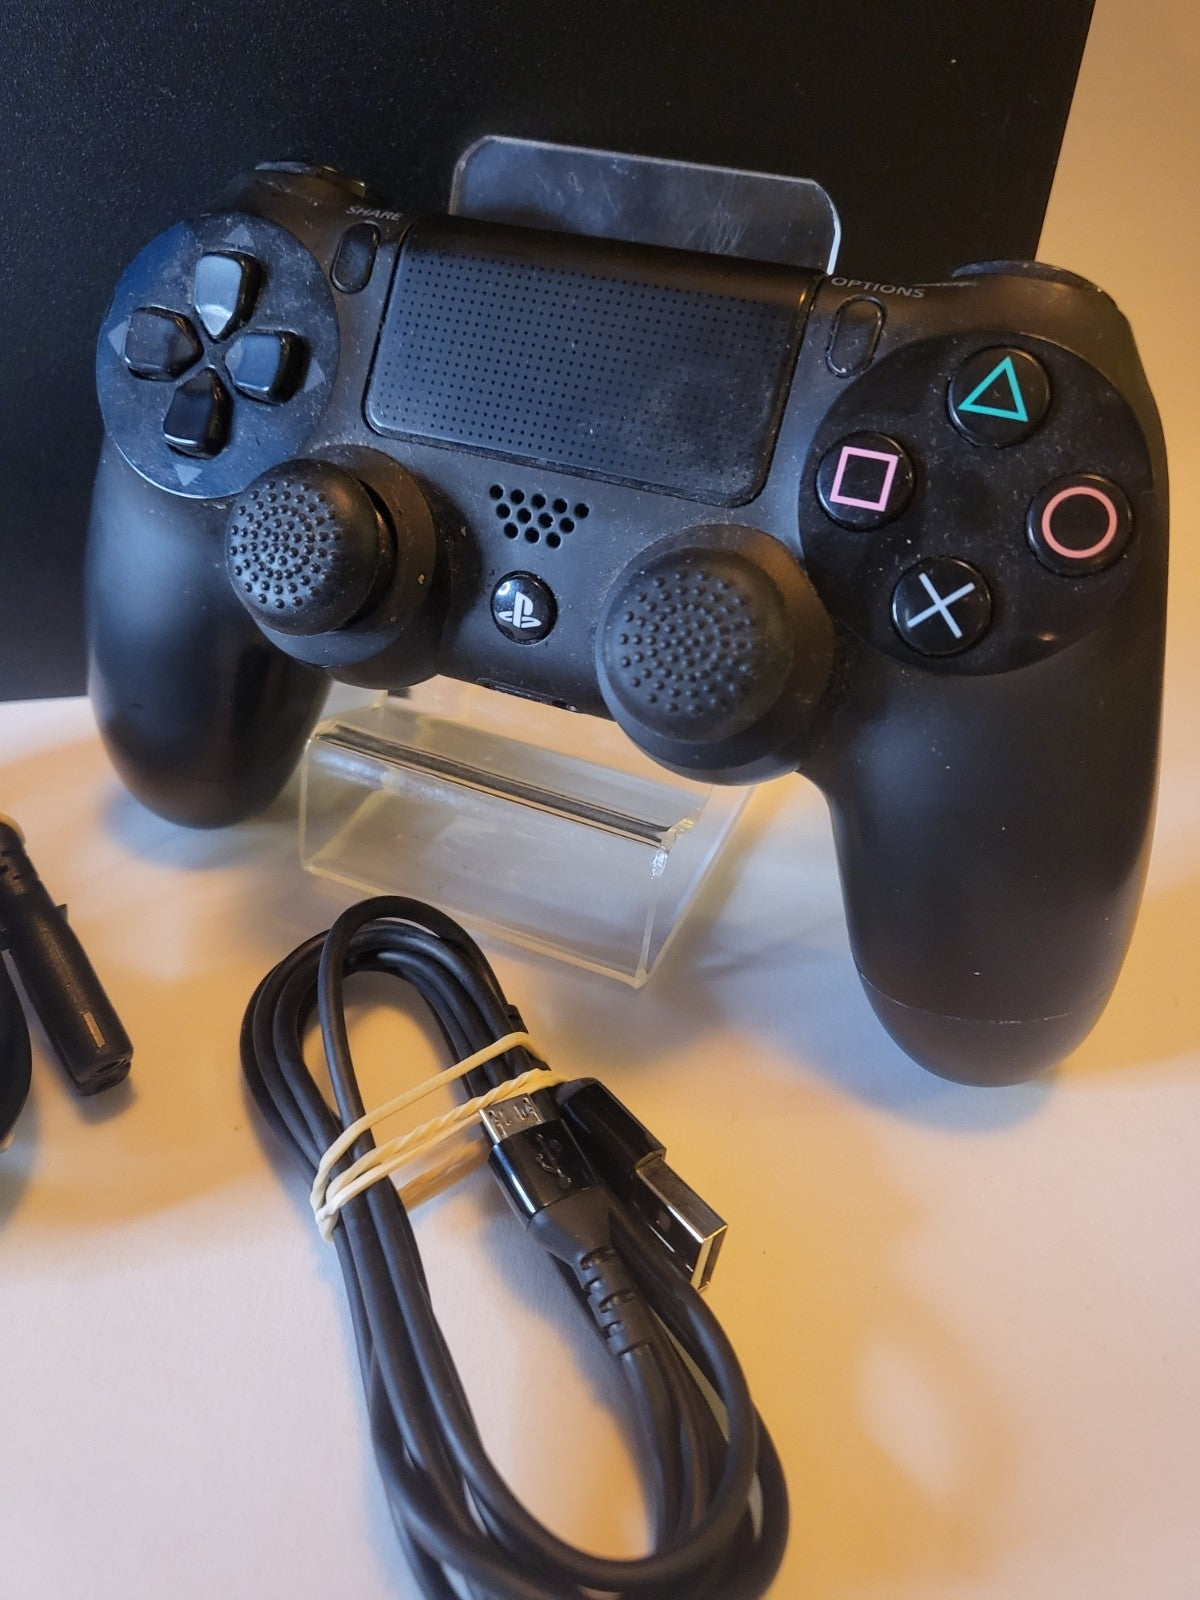 Playstation 4 Zwart 500gb met 1 controller en alle kabels